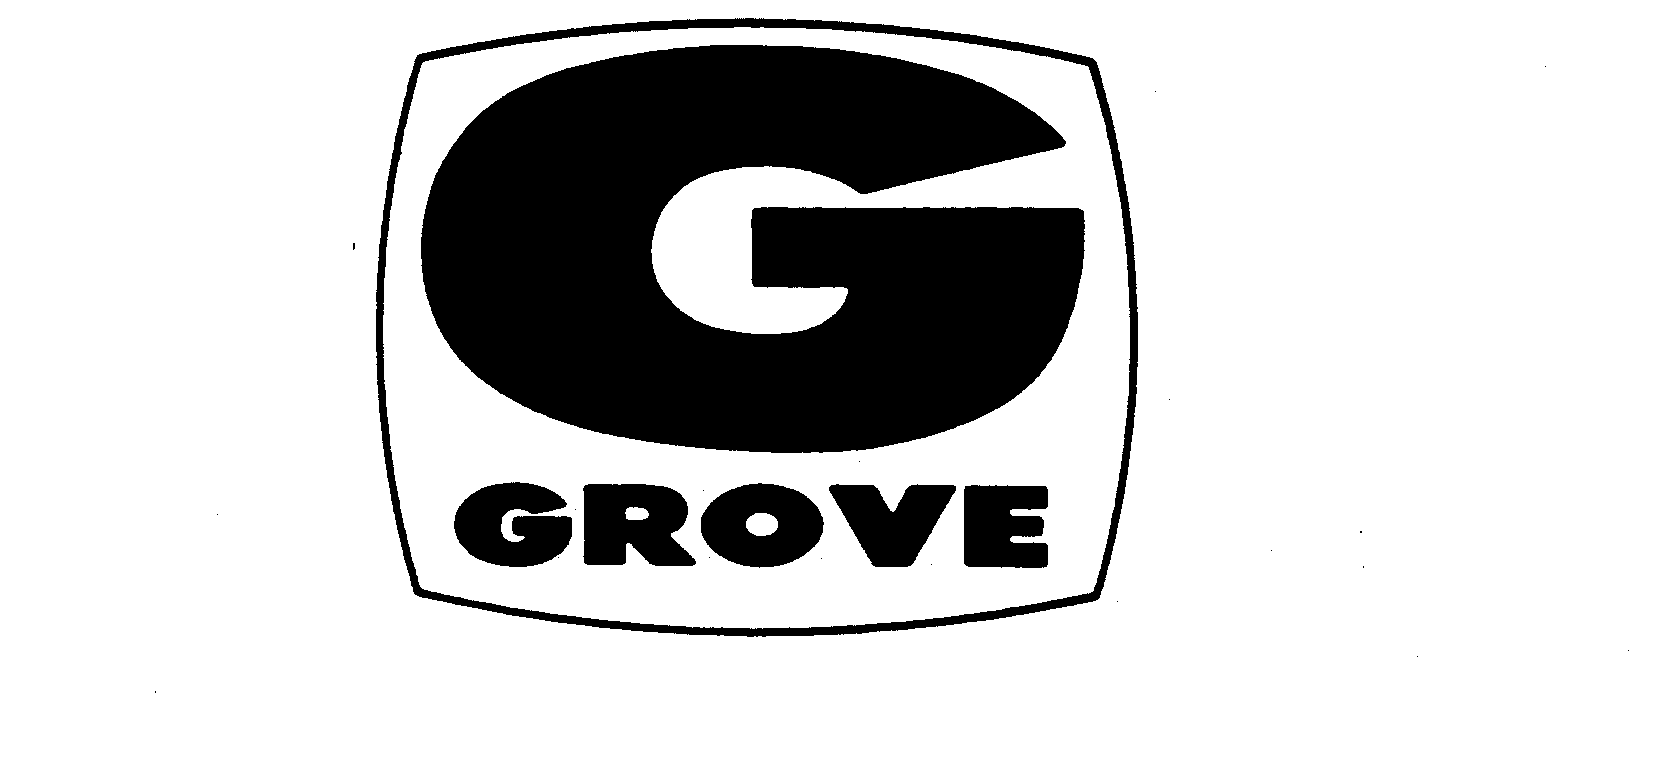 G GROVE